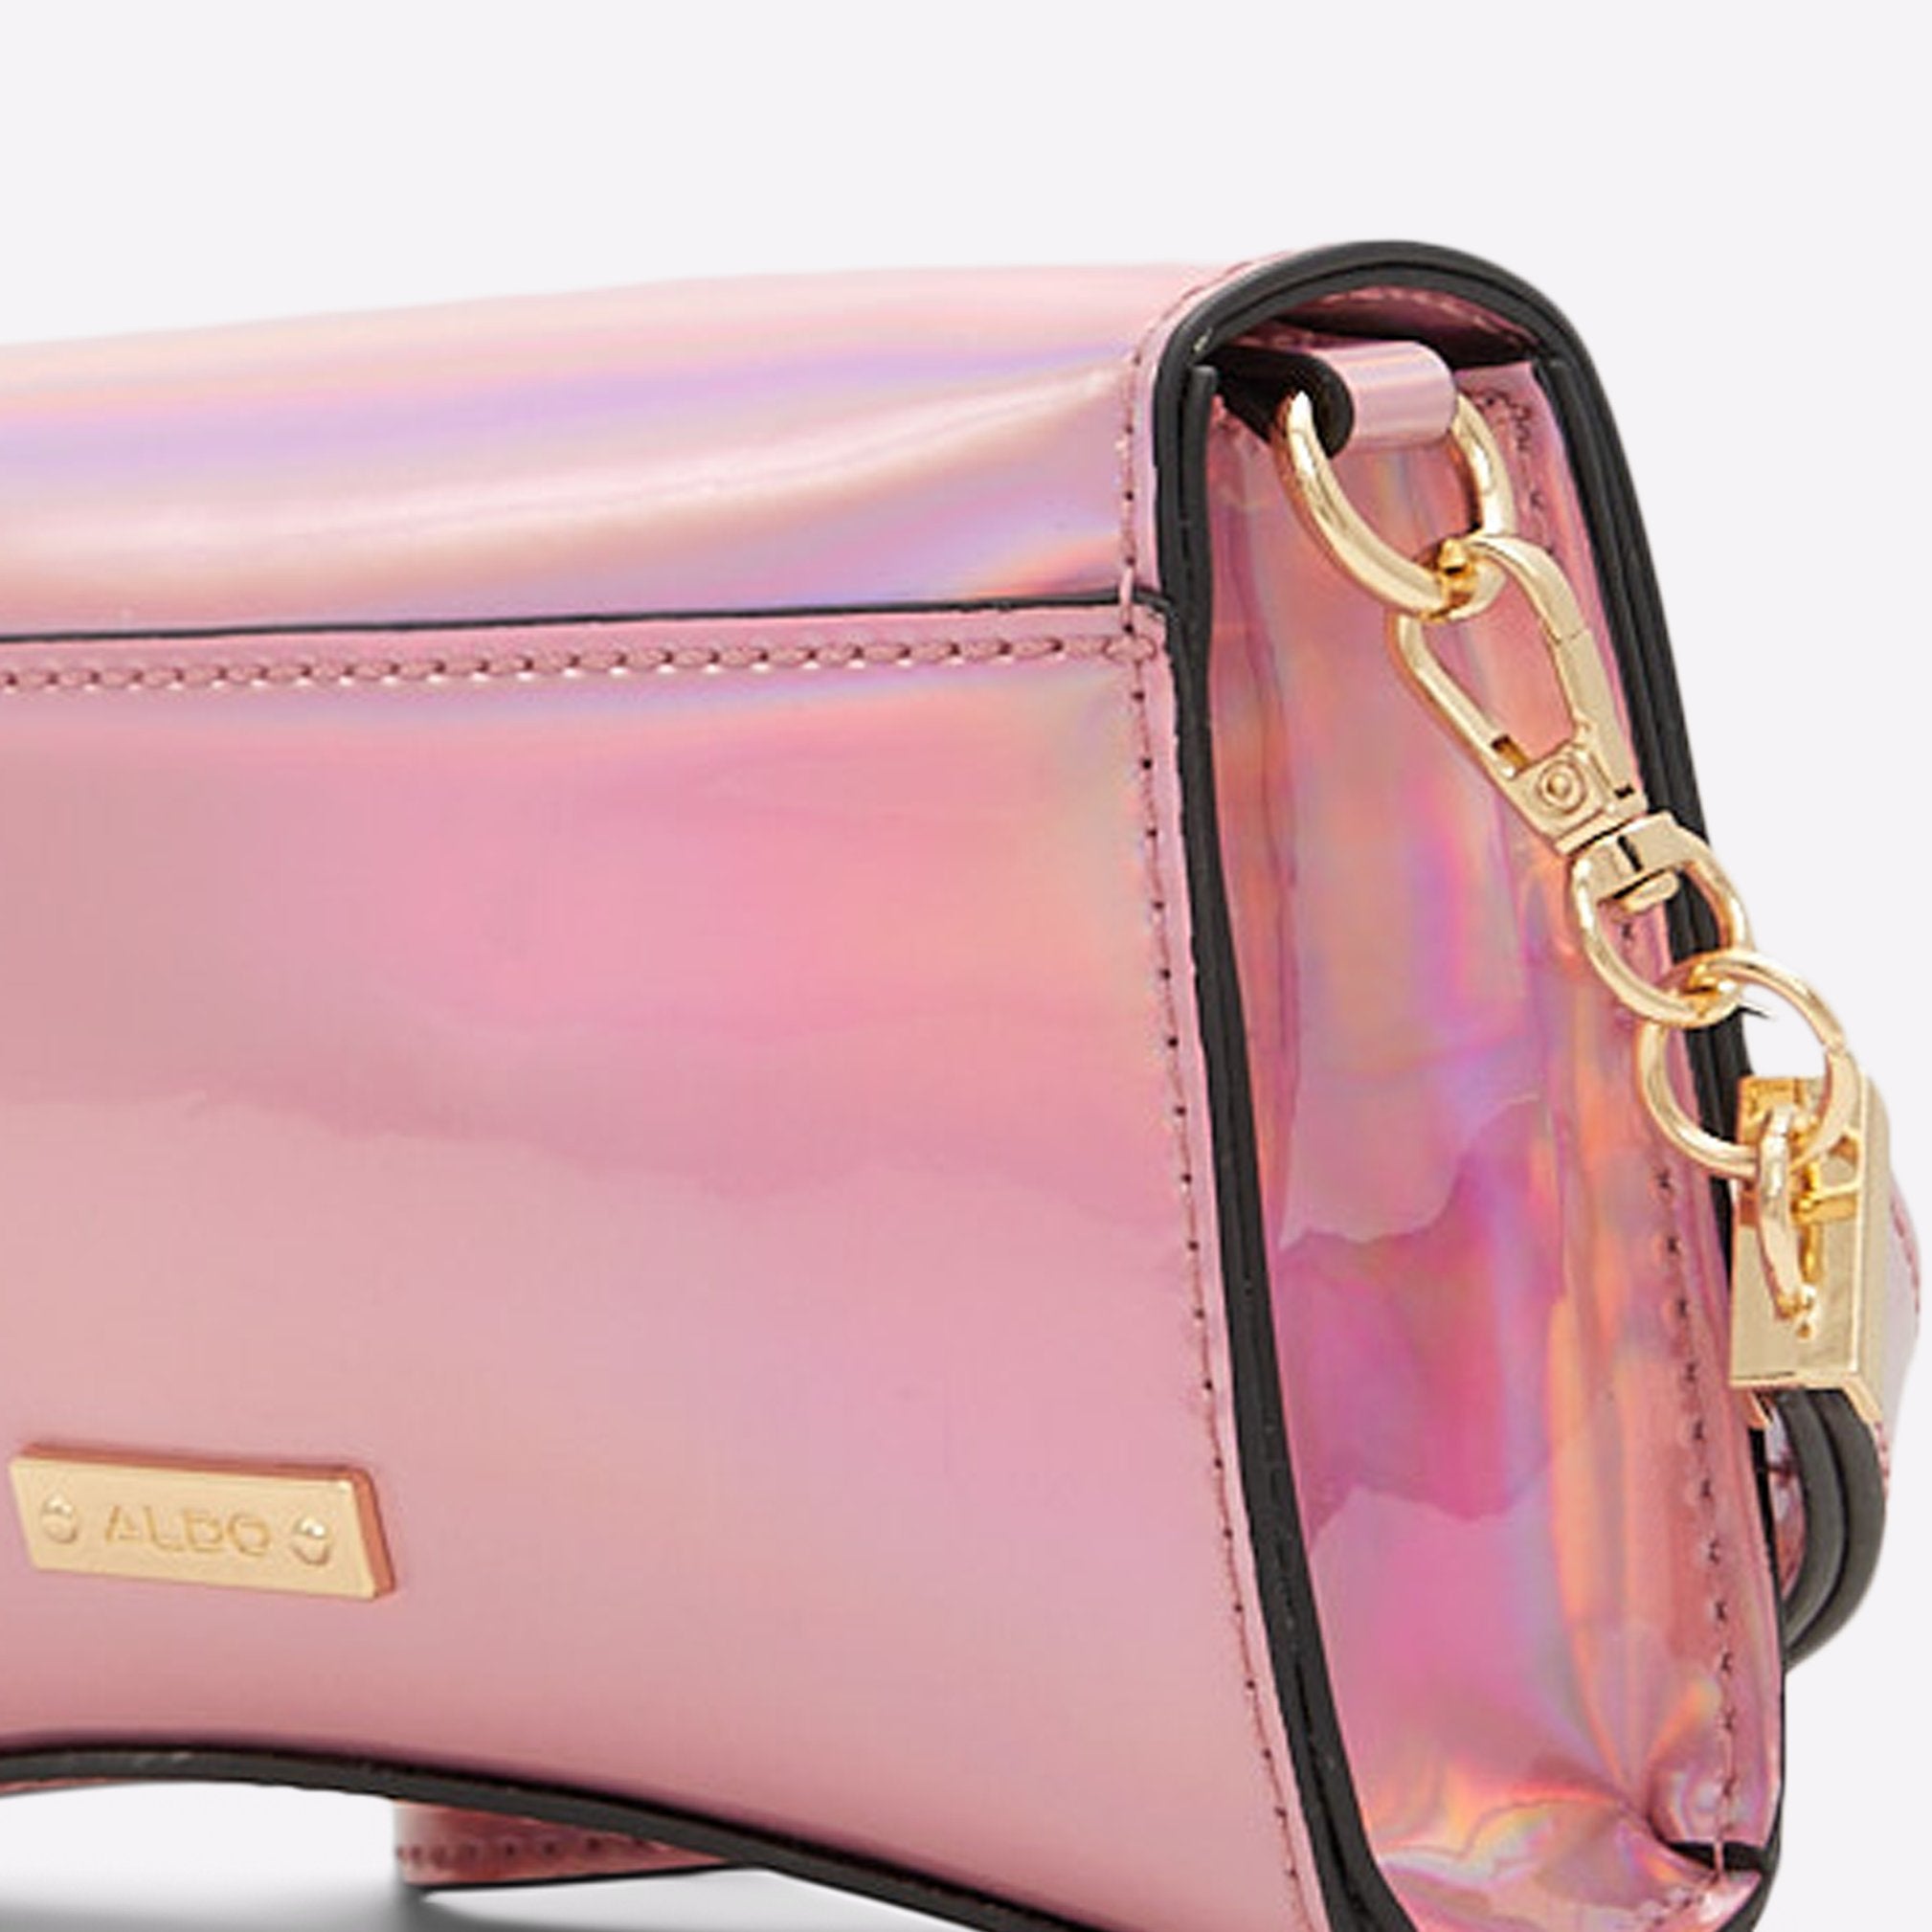 Cleeo / Clutch Bag Bag - Pink - ALDO KSA